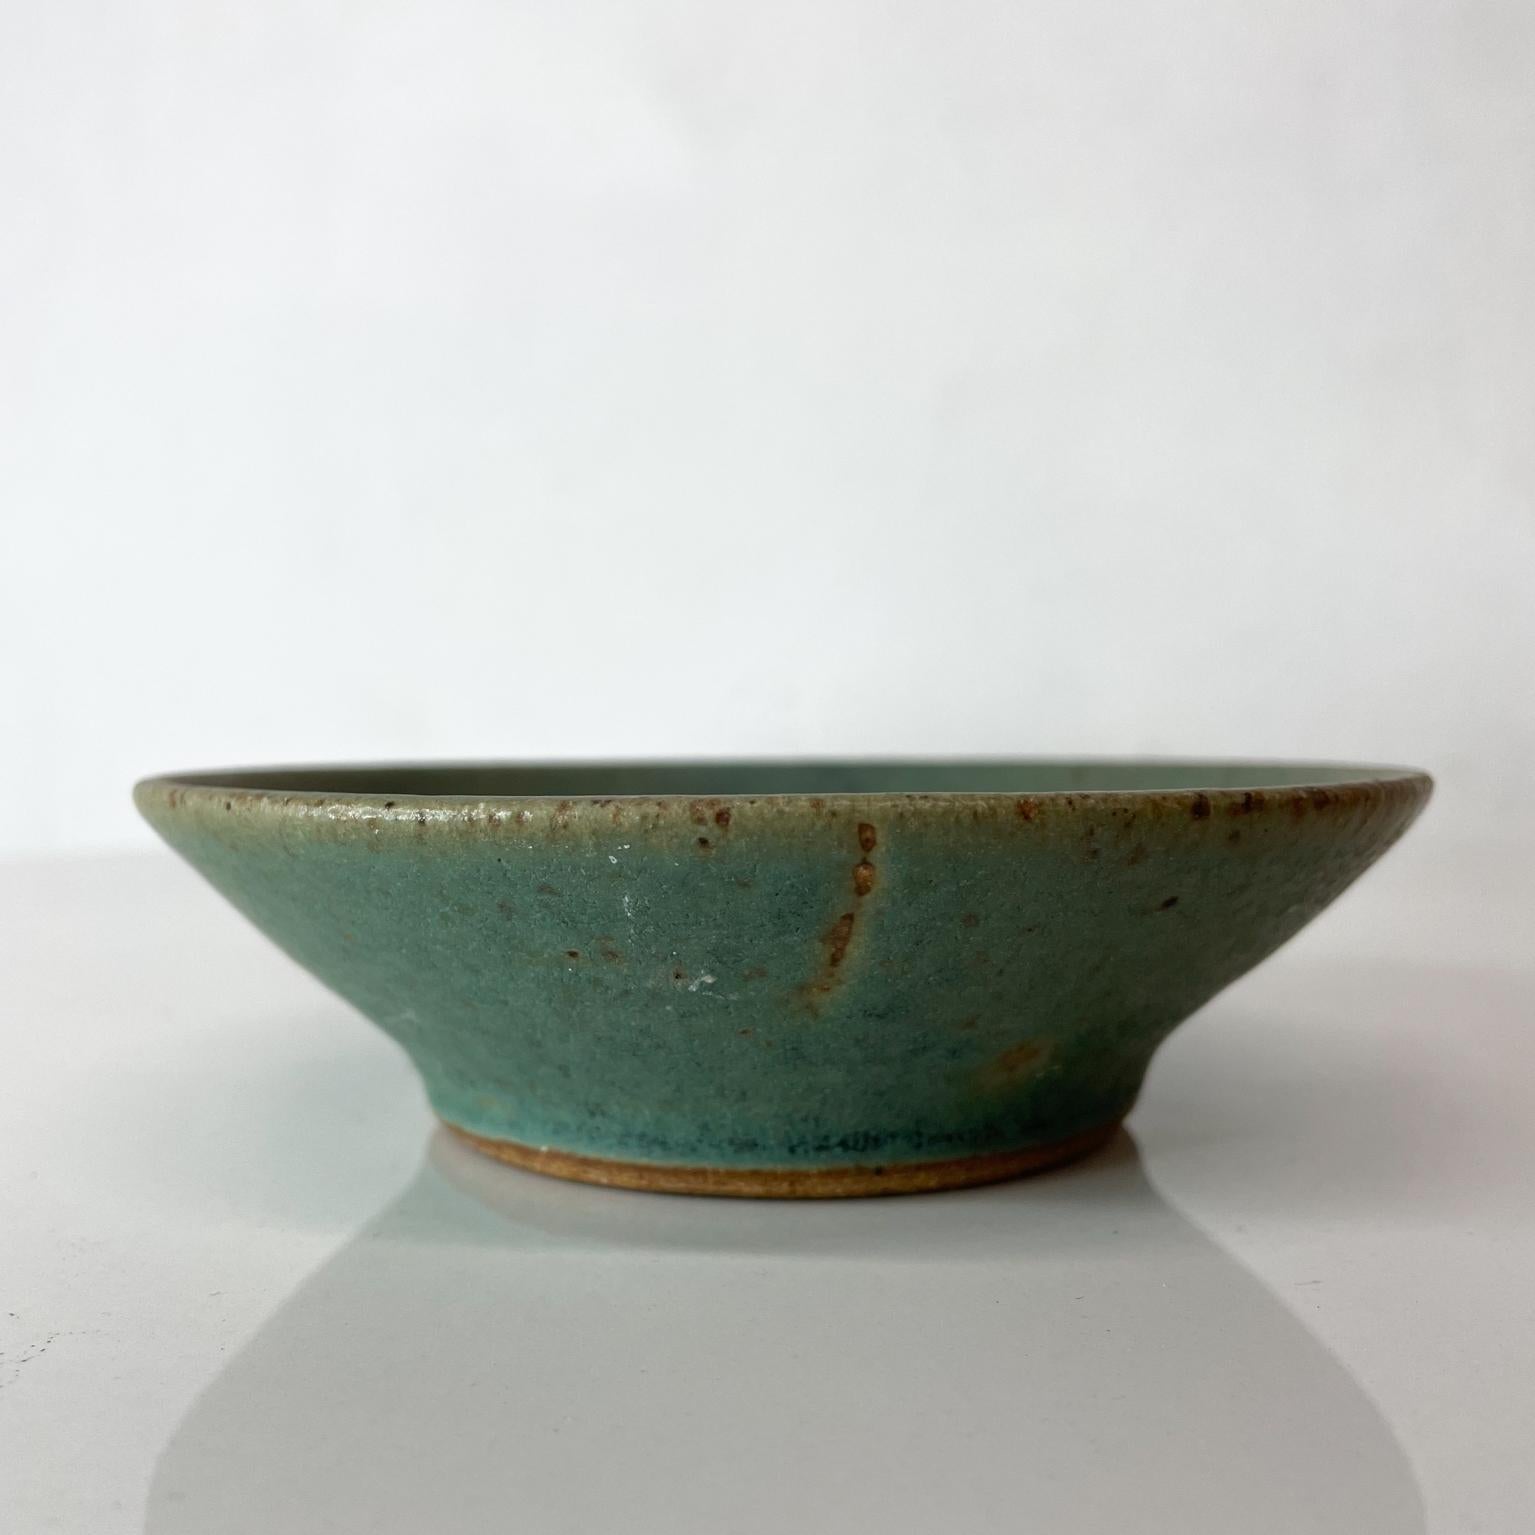 Sculptural Stoneware Art Pottery Bowl in Fusion Green Glaze 1970s California 1